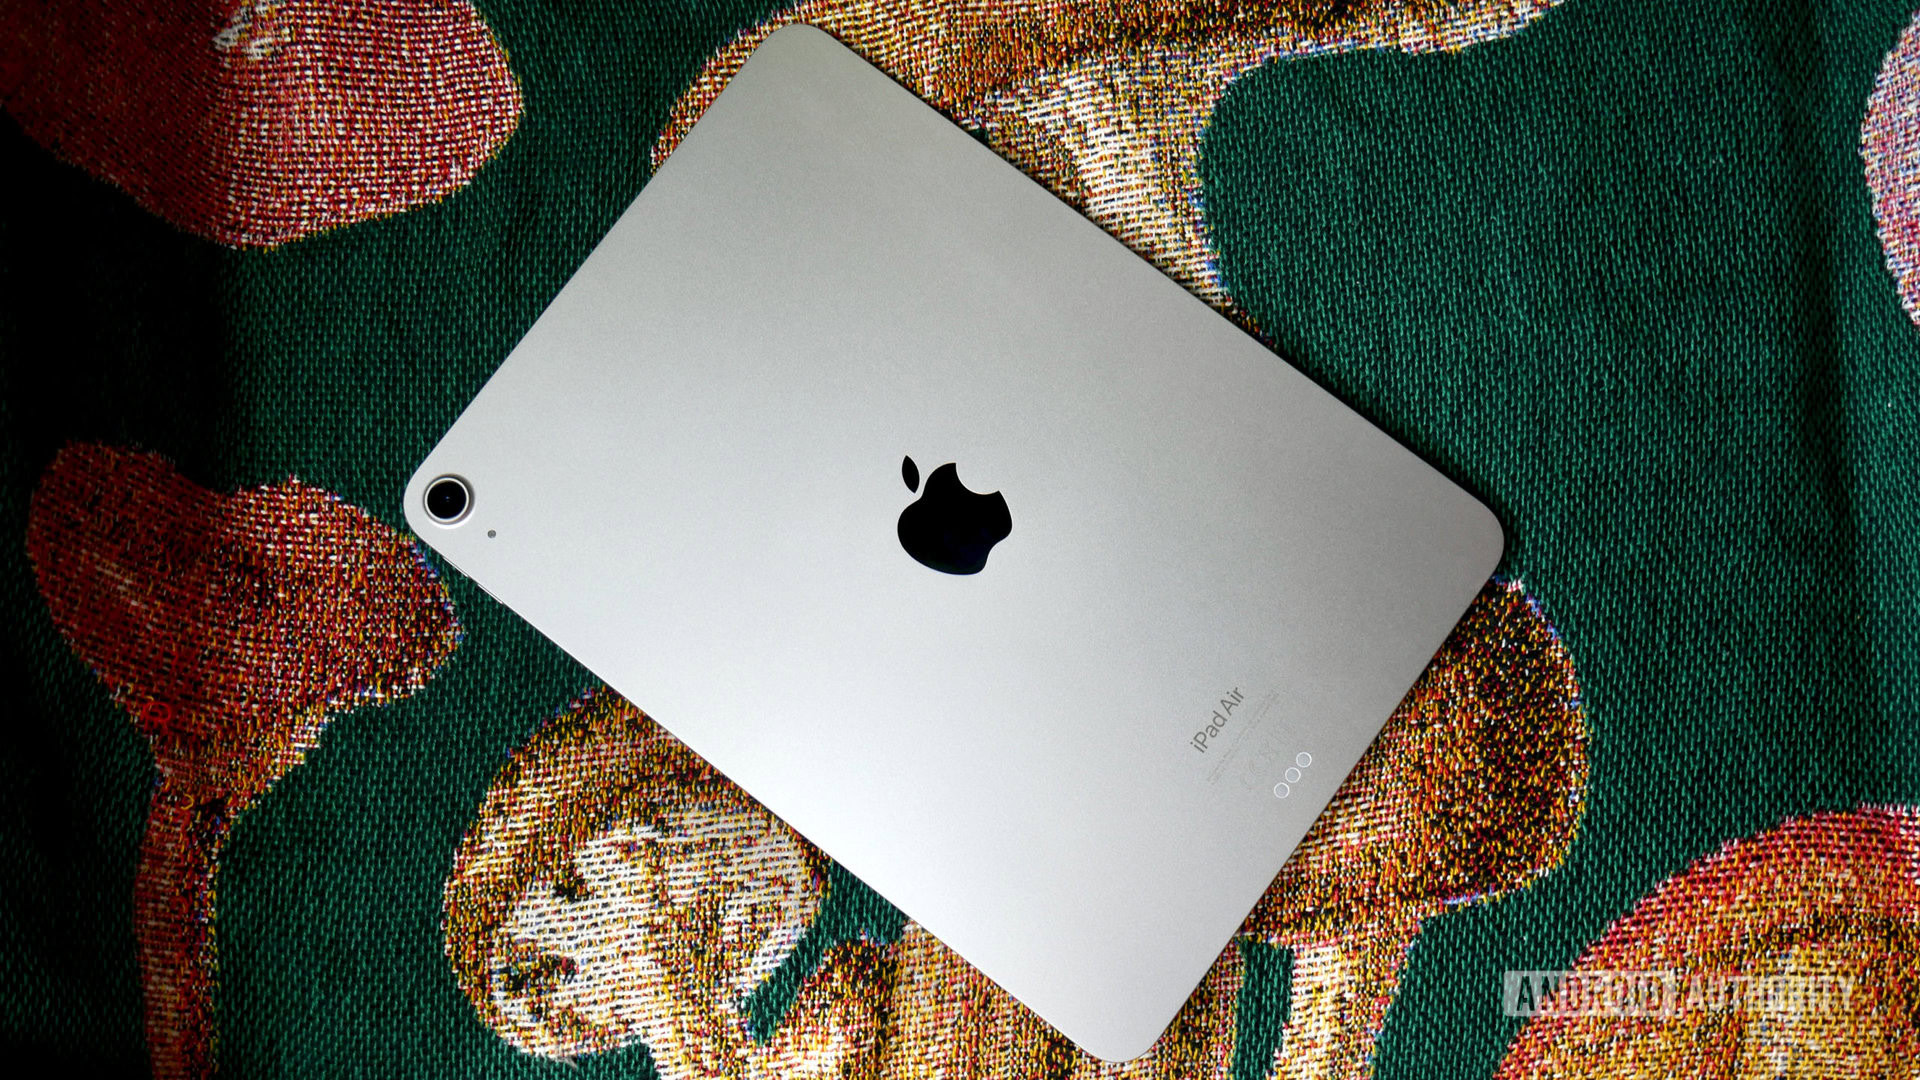 Apple iPad Air (5th generation) review: Mild upgrades, still